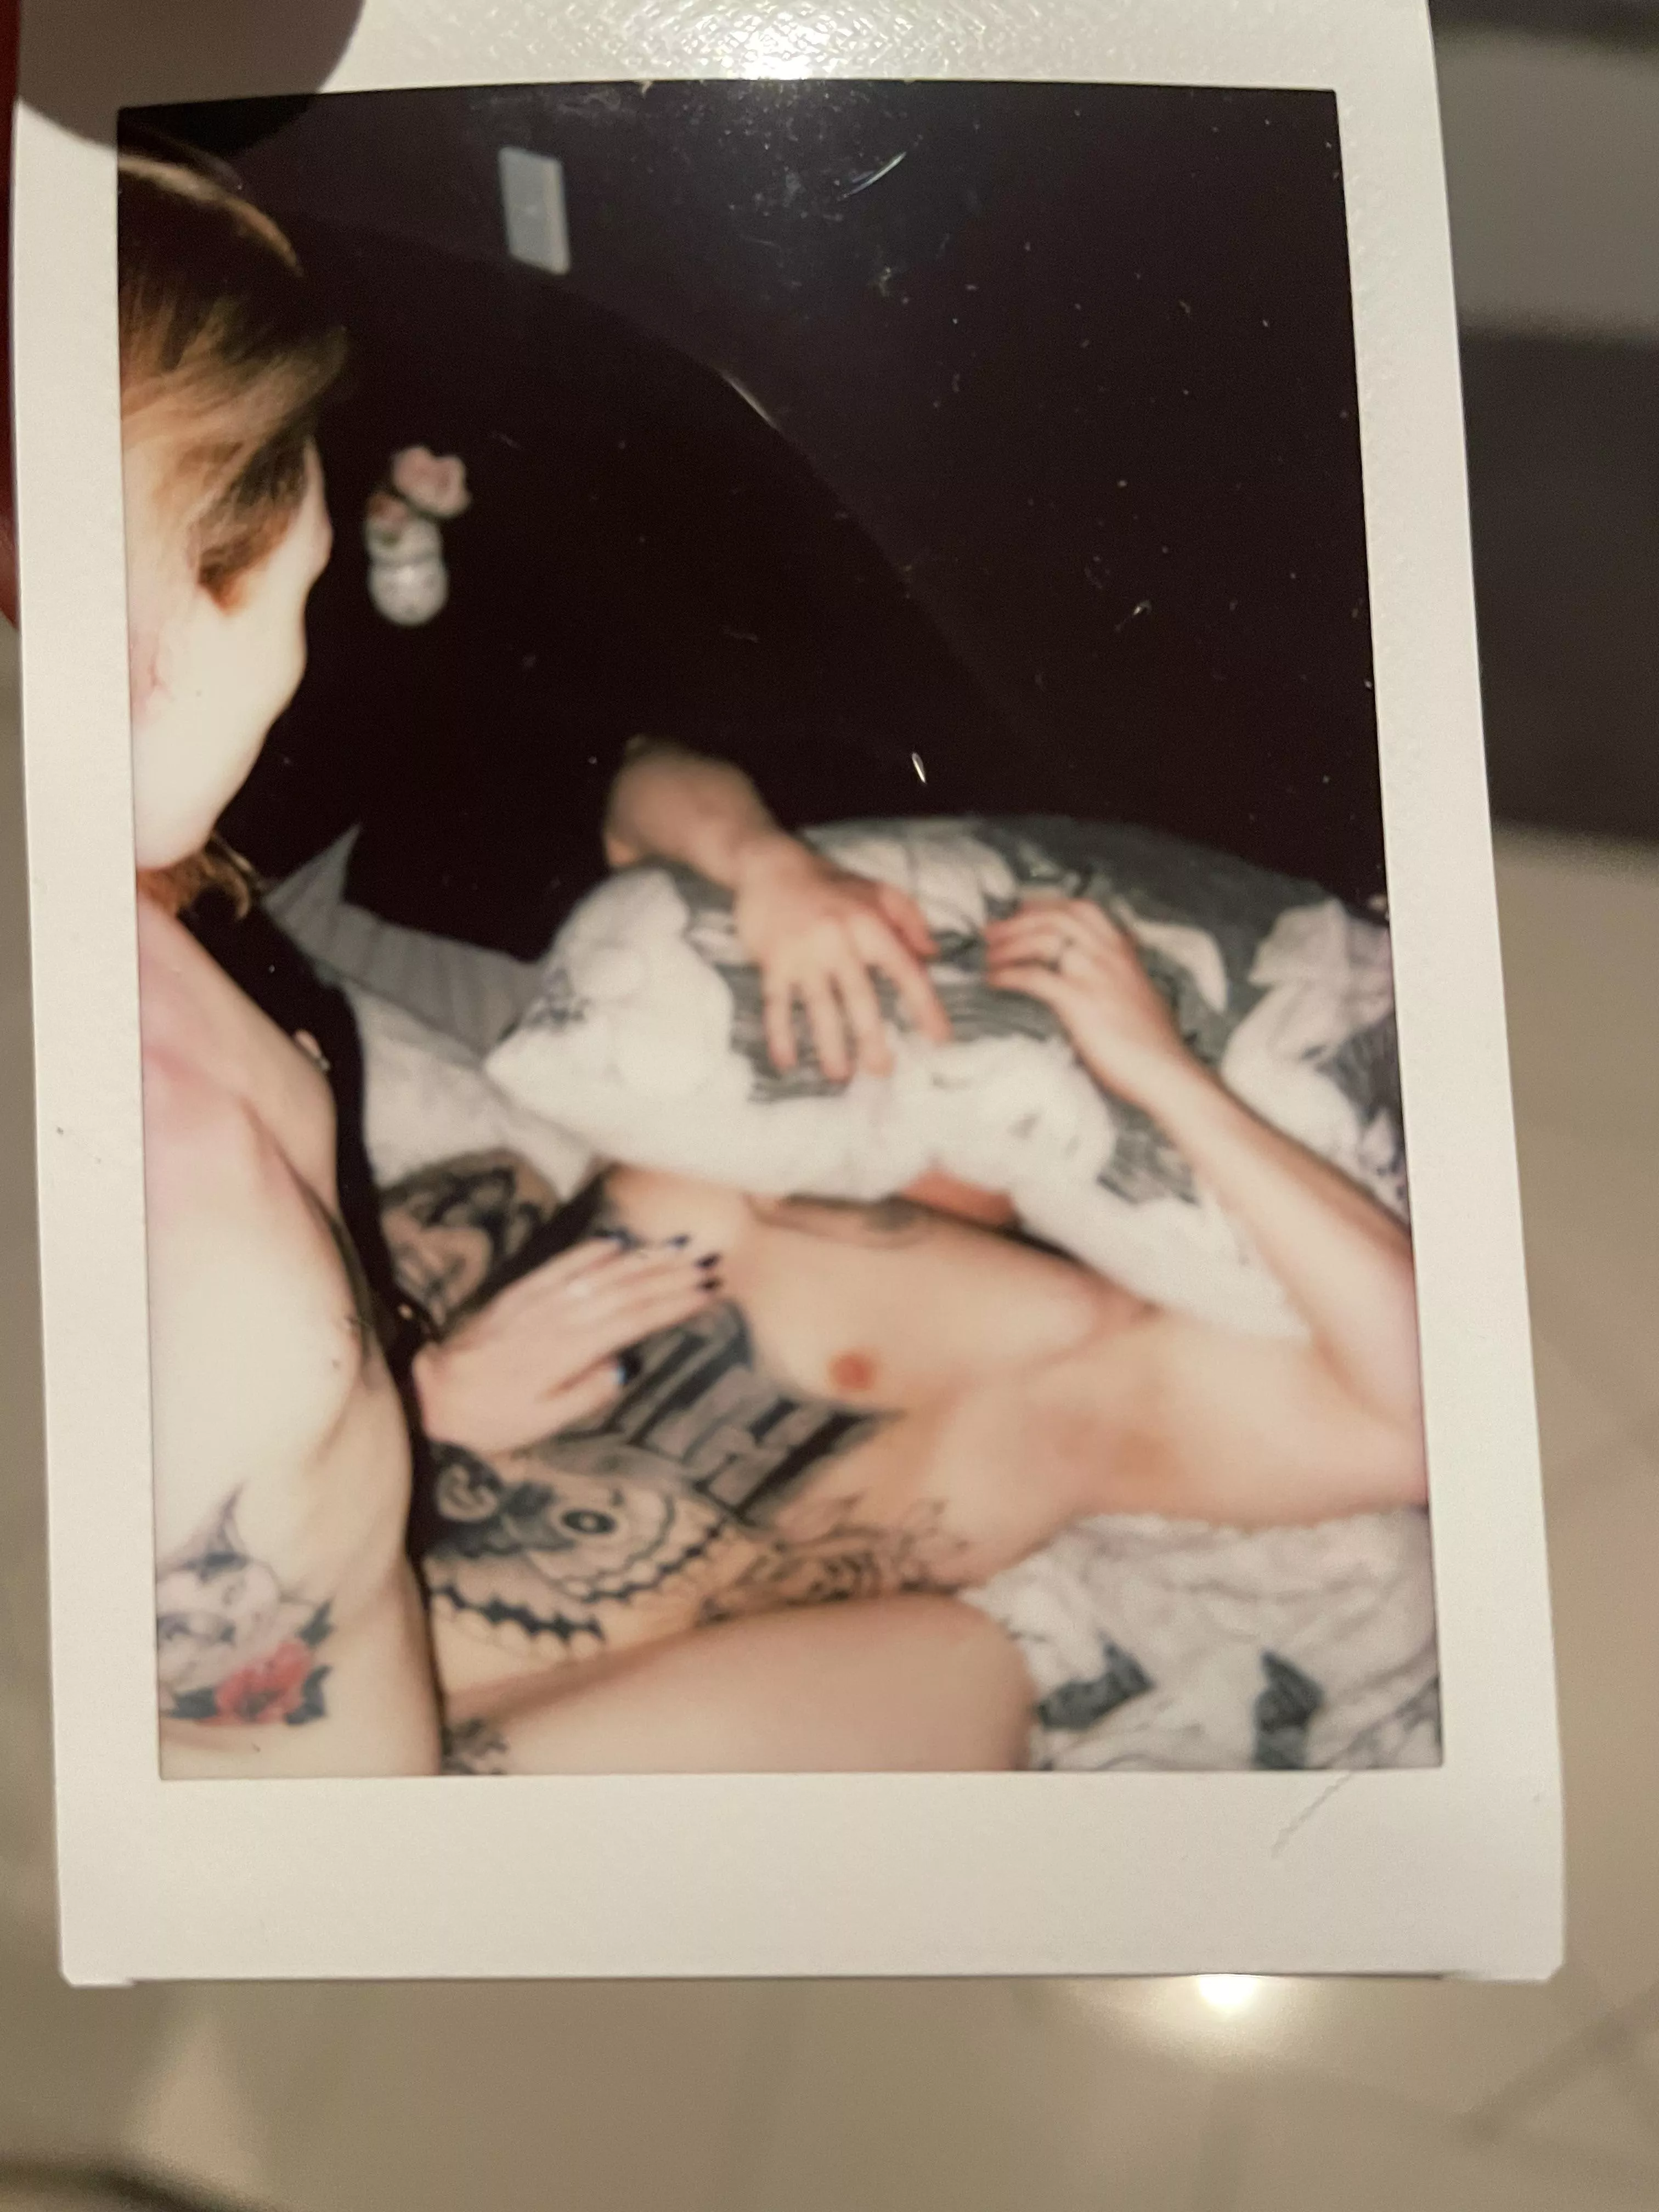 Fun with Polaroids (M29F28) nudes couplesgonewild NUDE-PICS pic